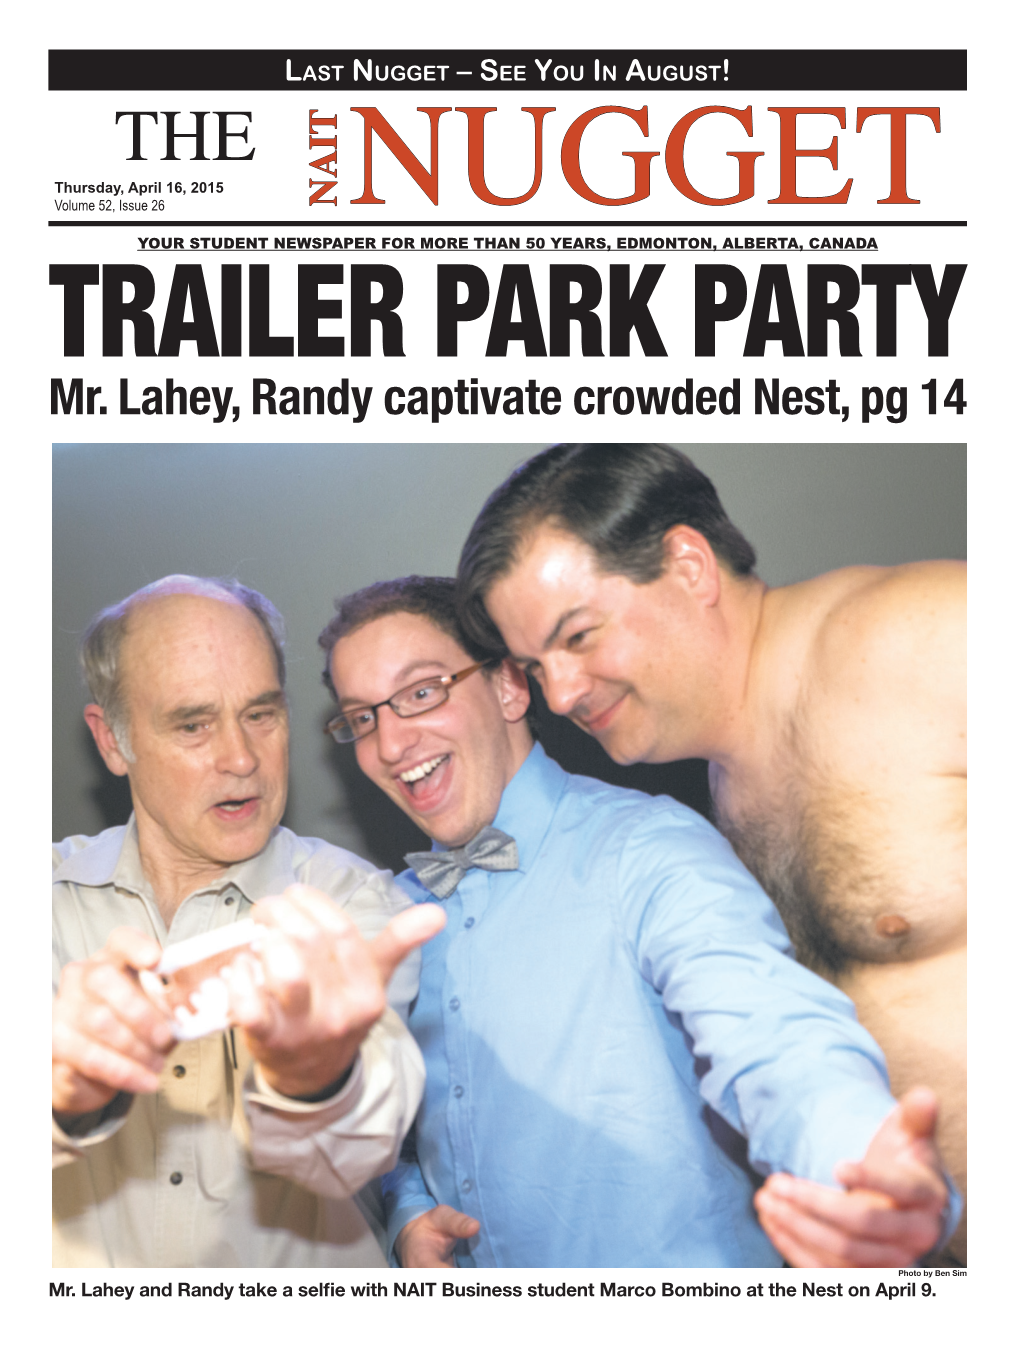 Mr. Lahey, Randy Captivate Crowded Nest, Pg 14